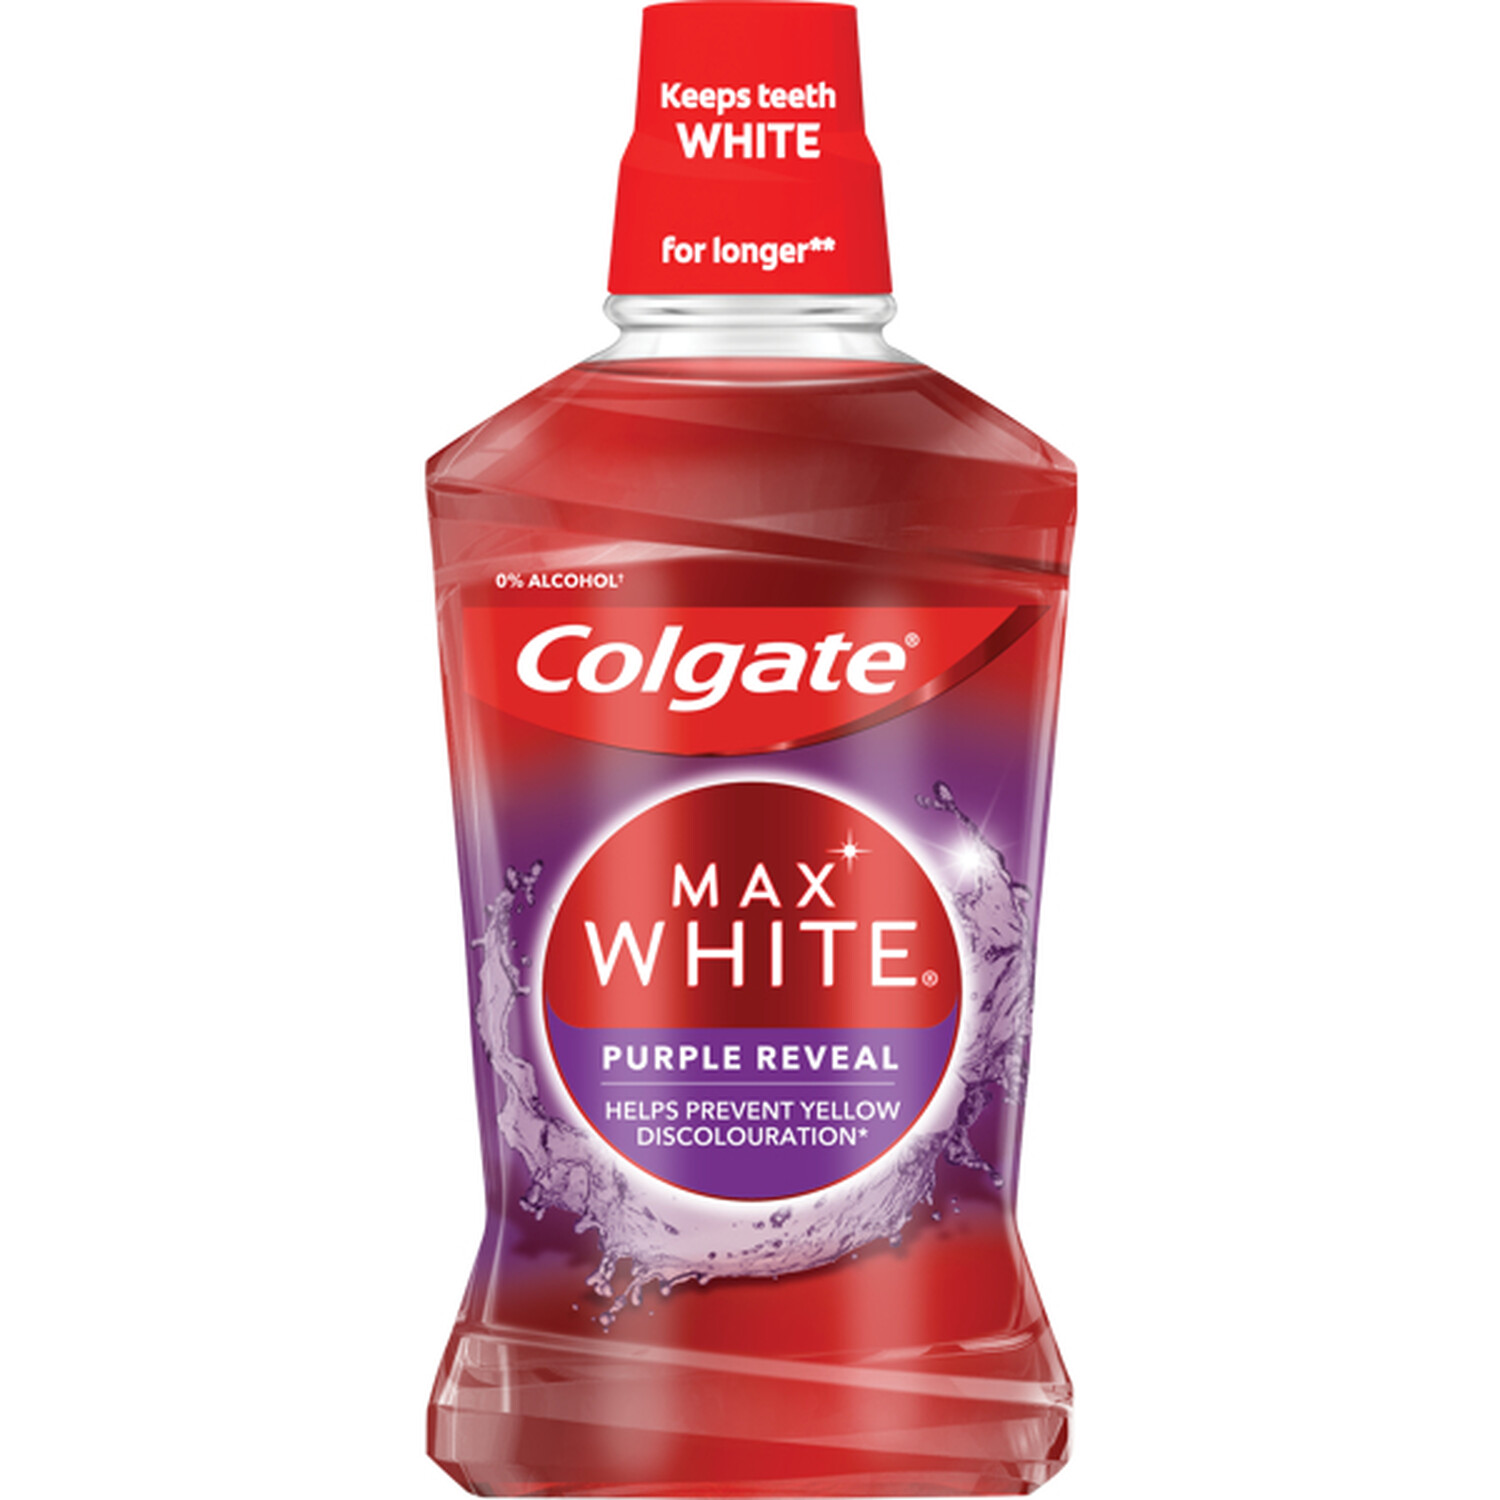 Colgate Max White Purple Reveal Mouthwash 500ml - Red Image